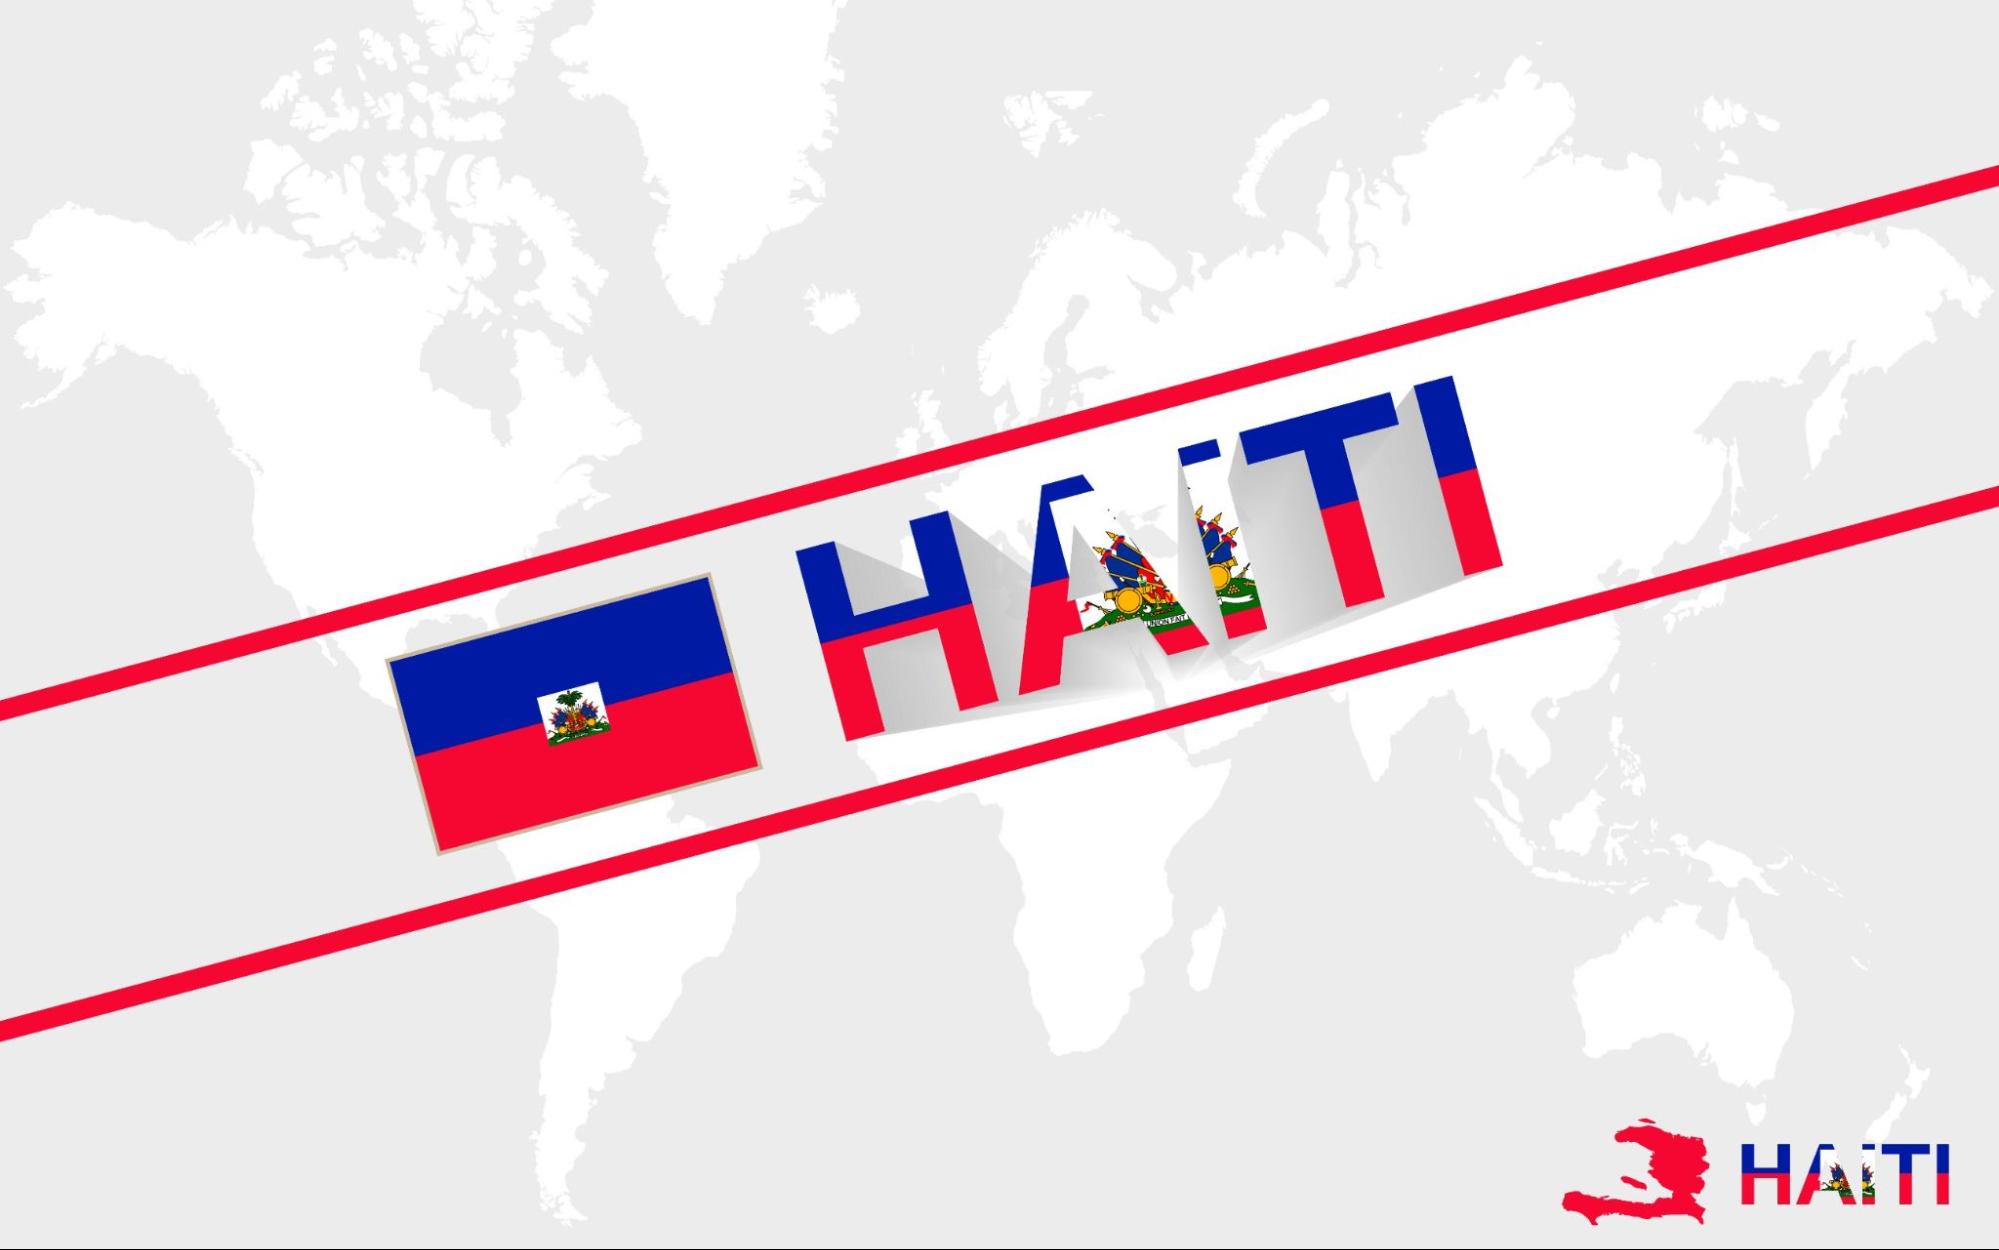 Haiti map flag and text illustration, on world map